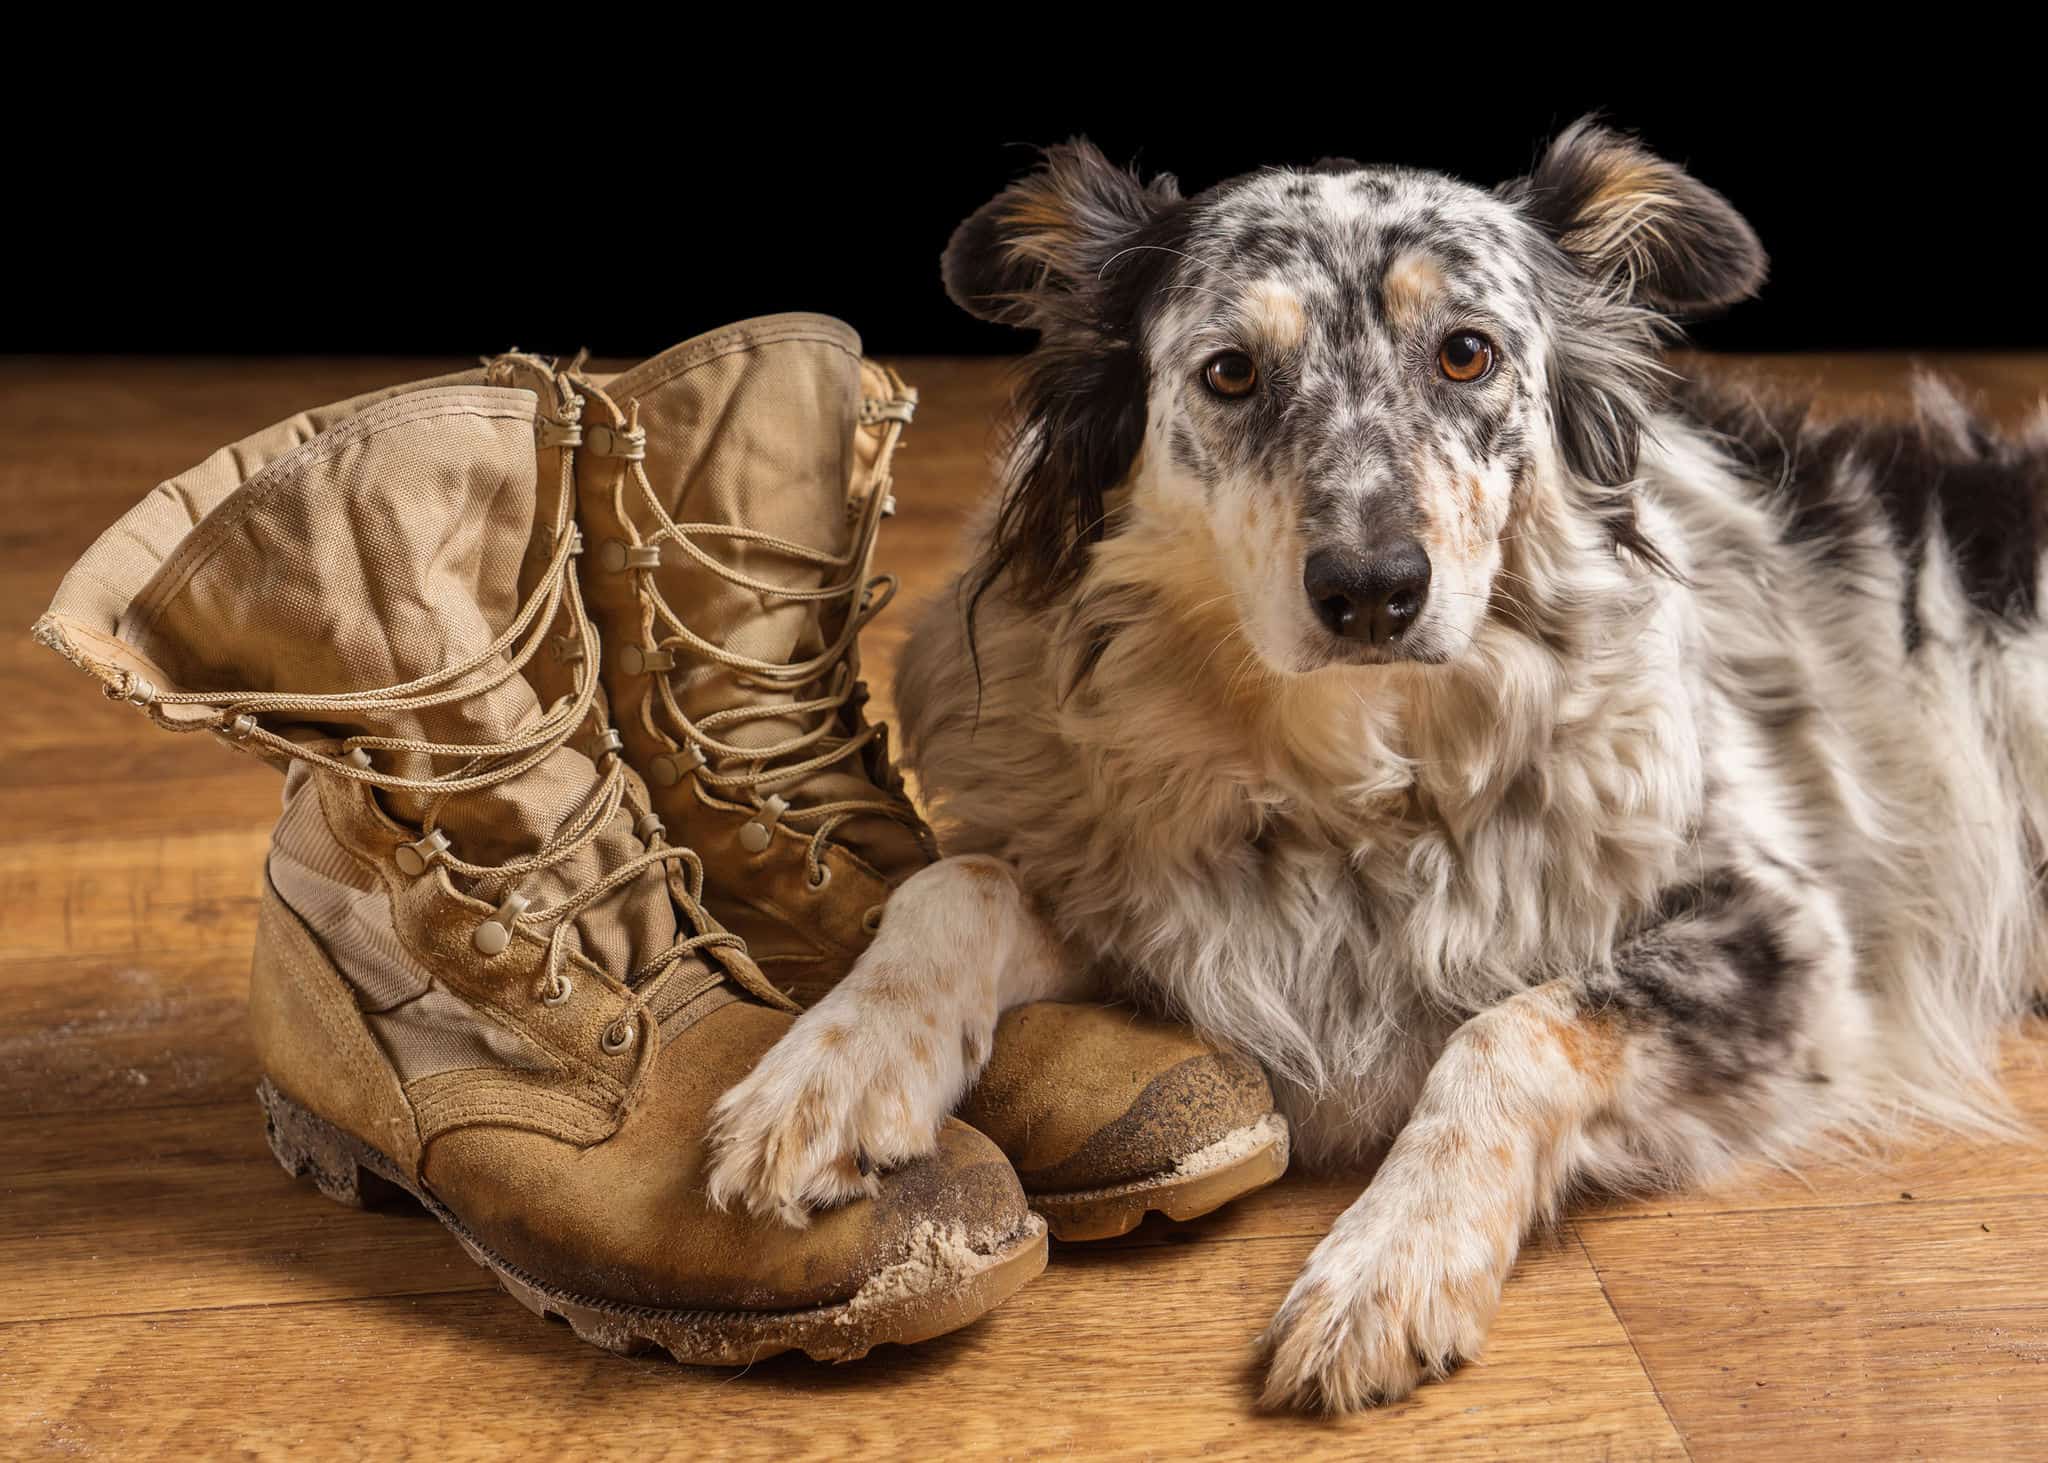 Border collie Australian shepherd mix dog lying down on tan veteran service military combat boots looking sad